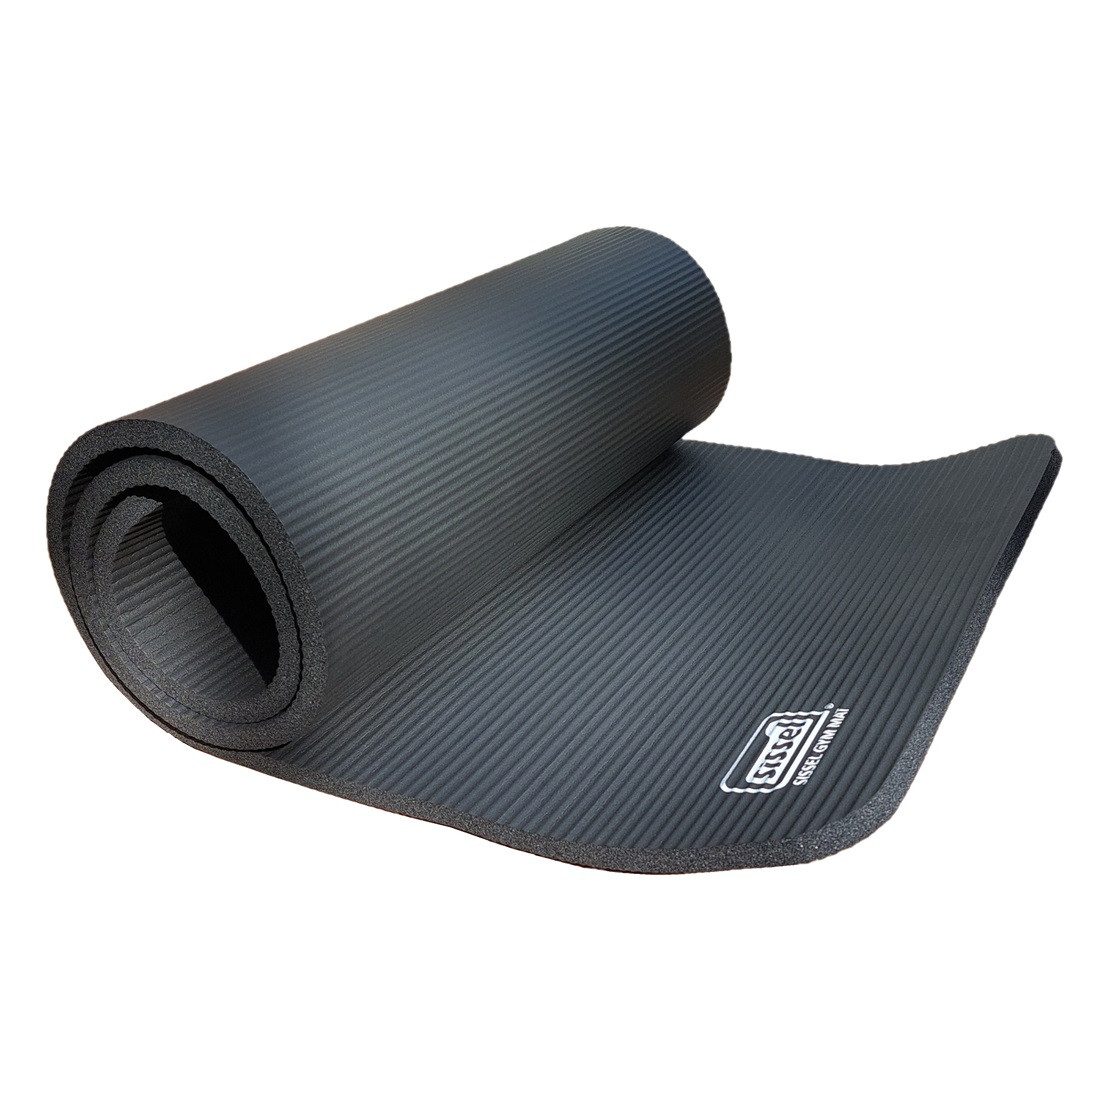 SISSEL Trainingsmatte Gymnastikmatte (Farbe: Schwarz), Maße: 180 x 60 x 1,5 cm